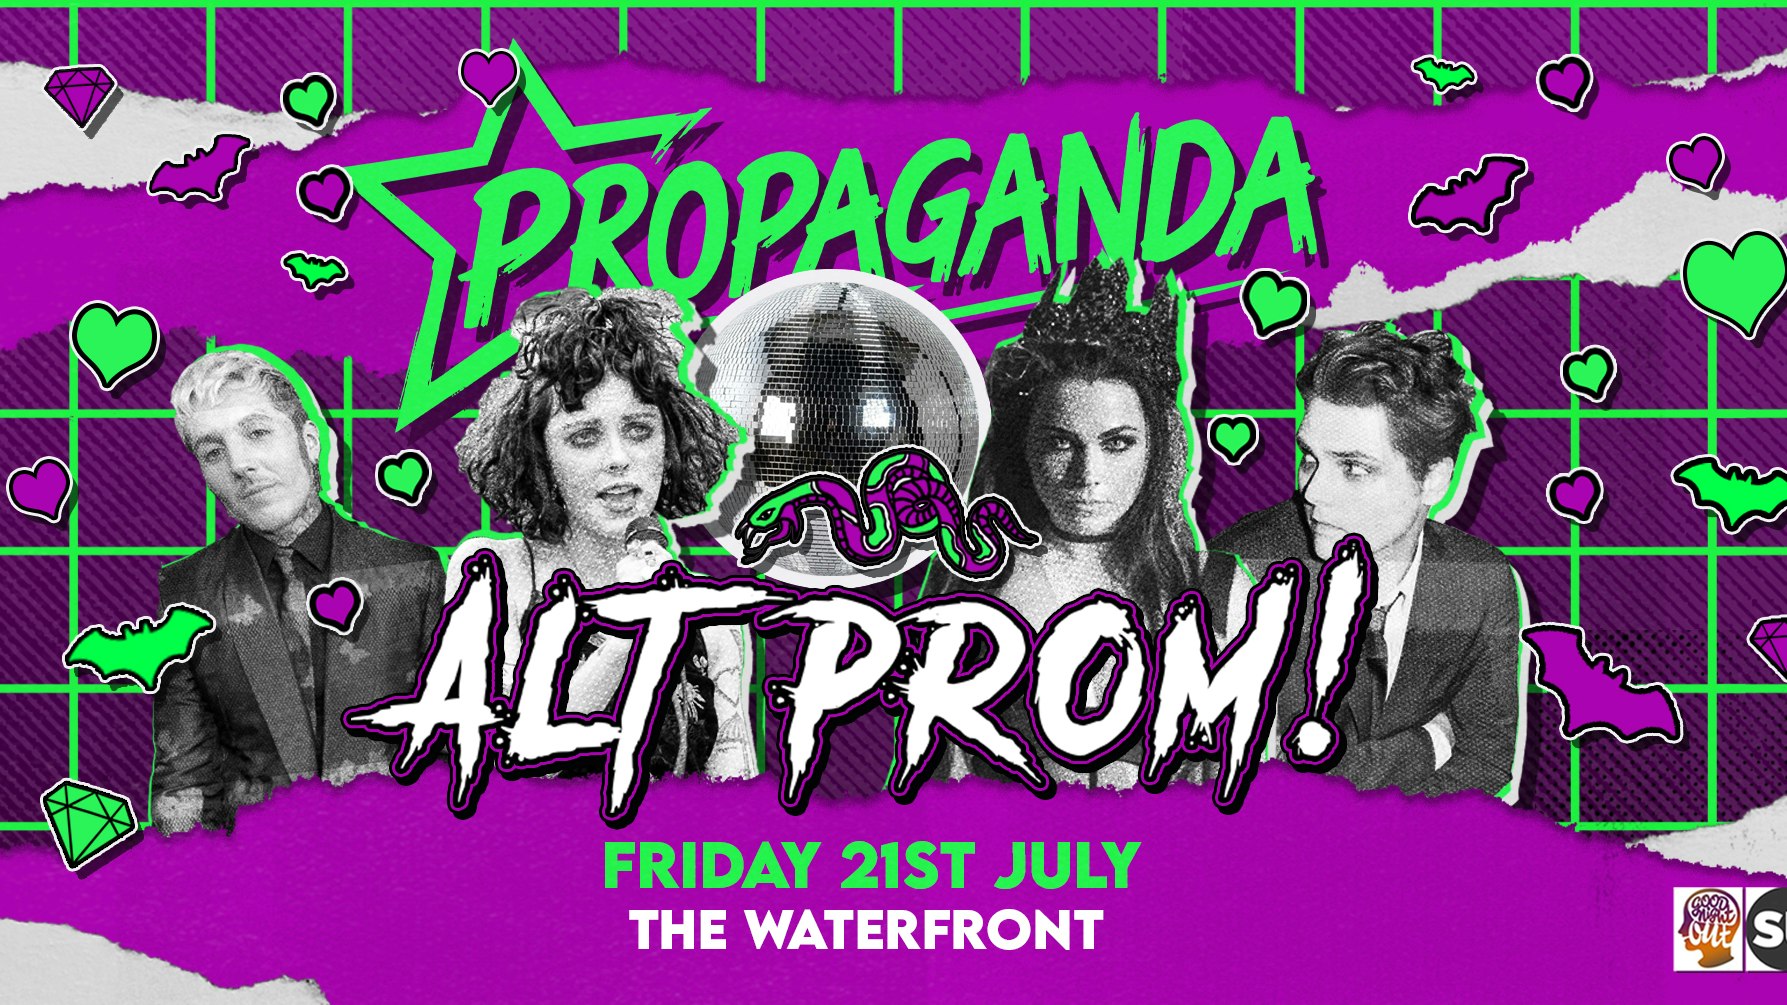 Alt Prom! – Propaganda Norwich at The Waterfront!